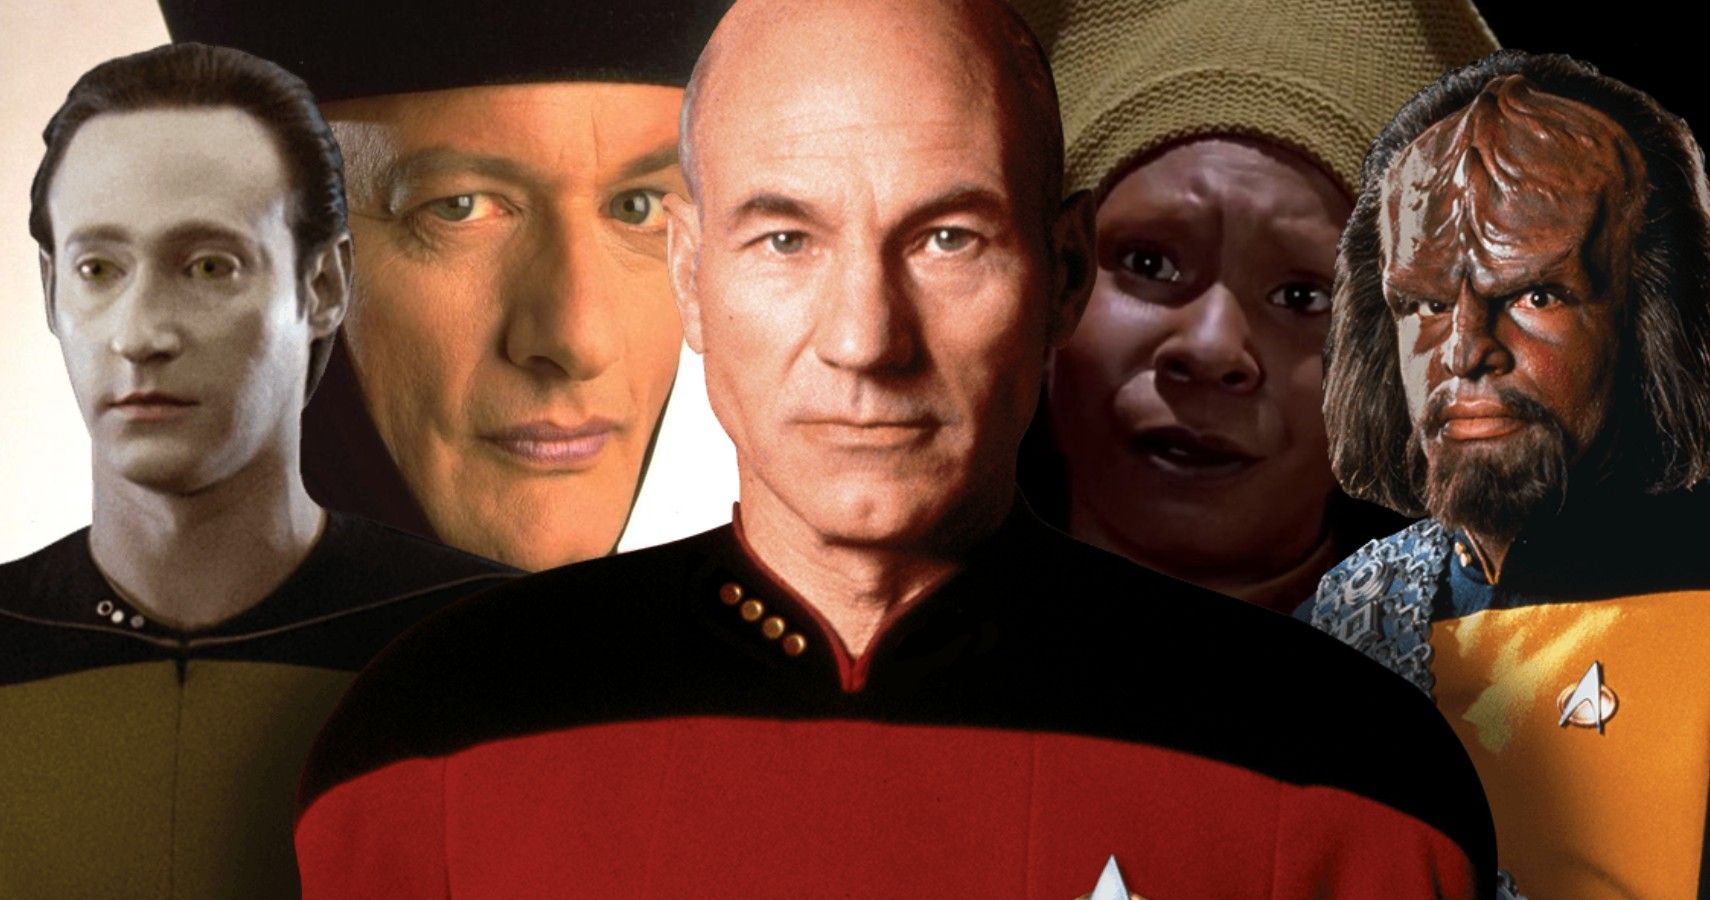 10 Best Episodes of Star Trek The Next Generation According to IMDb